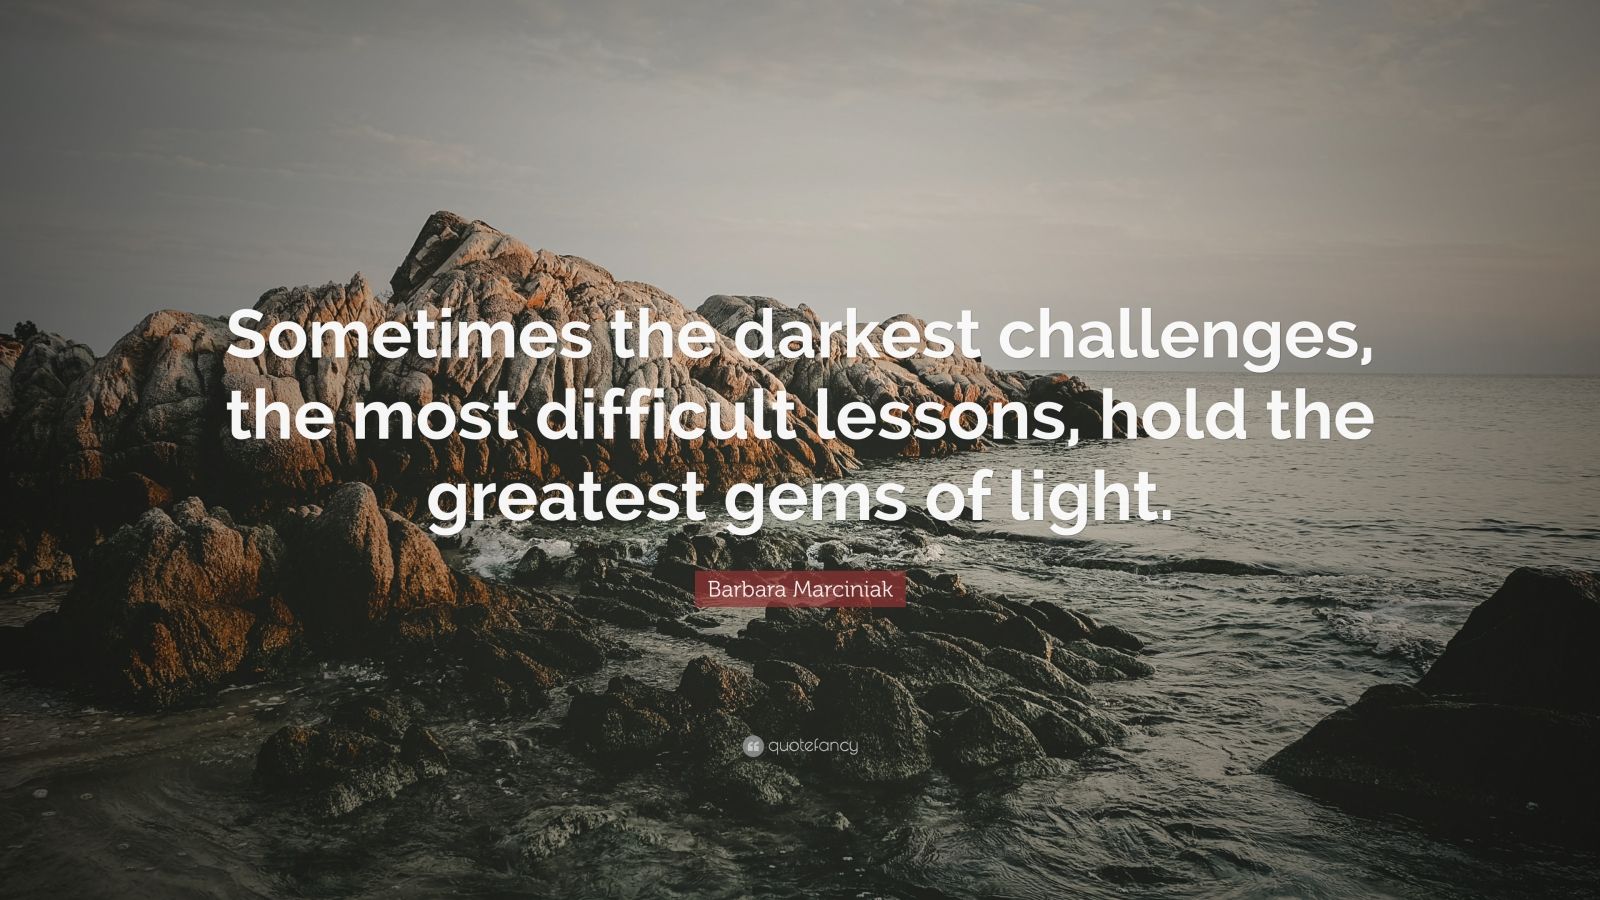 Barbara Marciniak Quote: “Sometimes the darkest challenges, the most